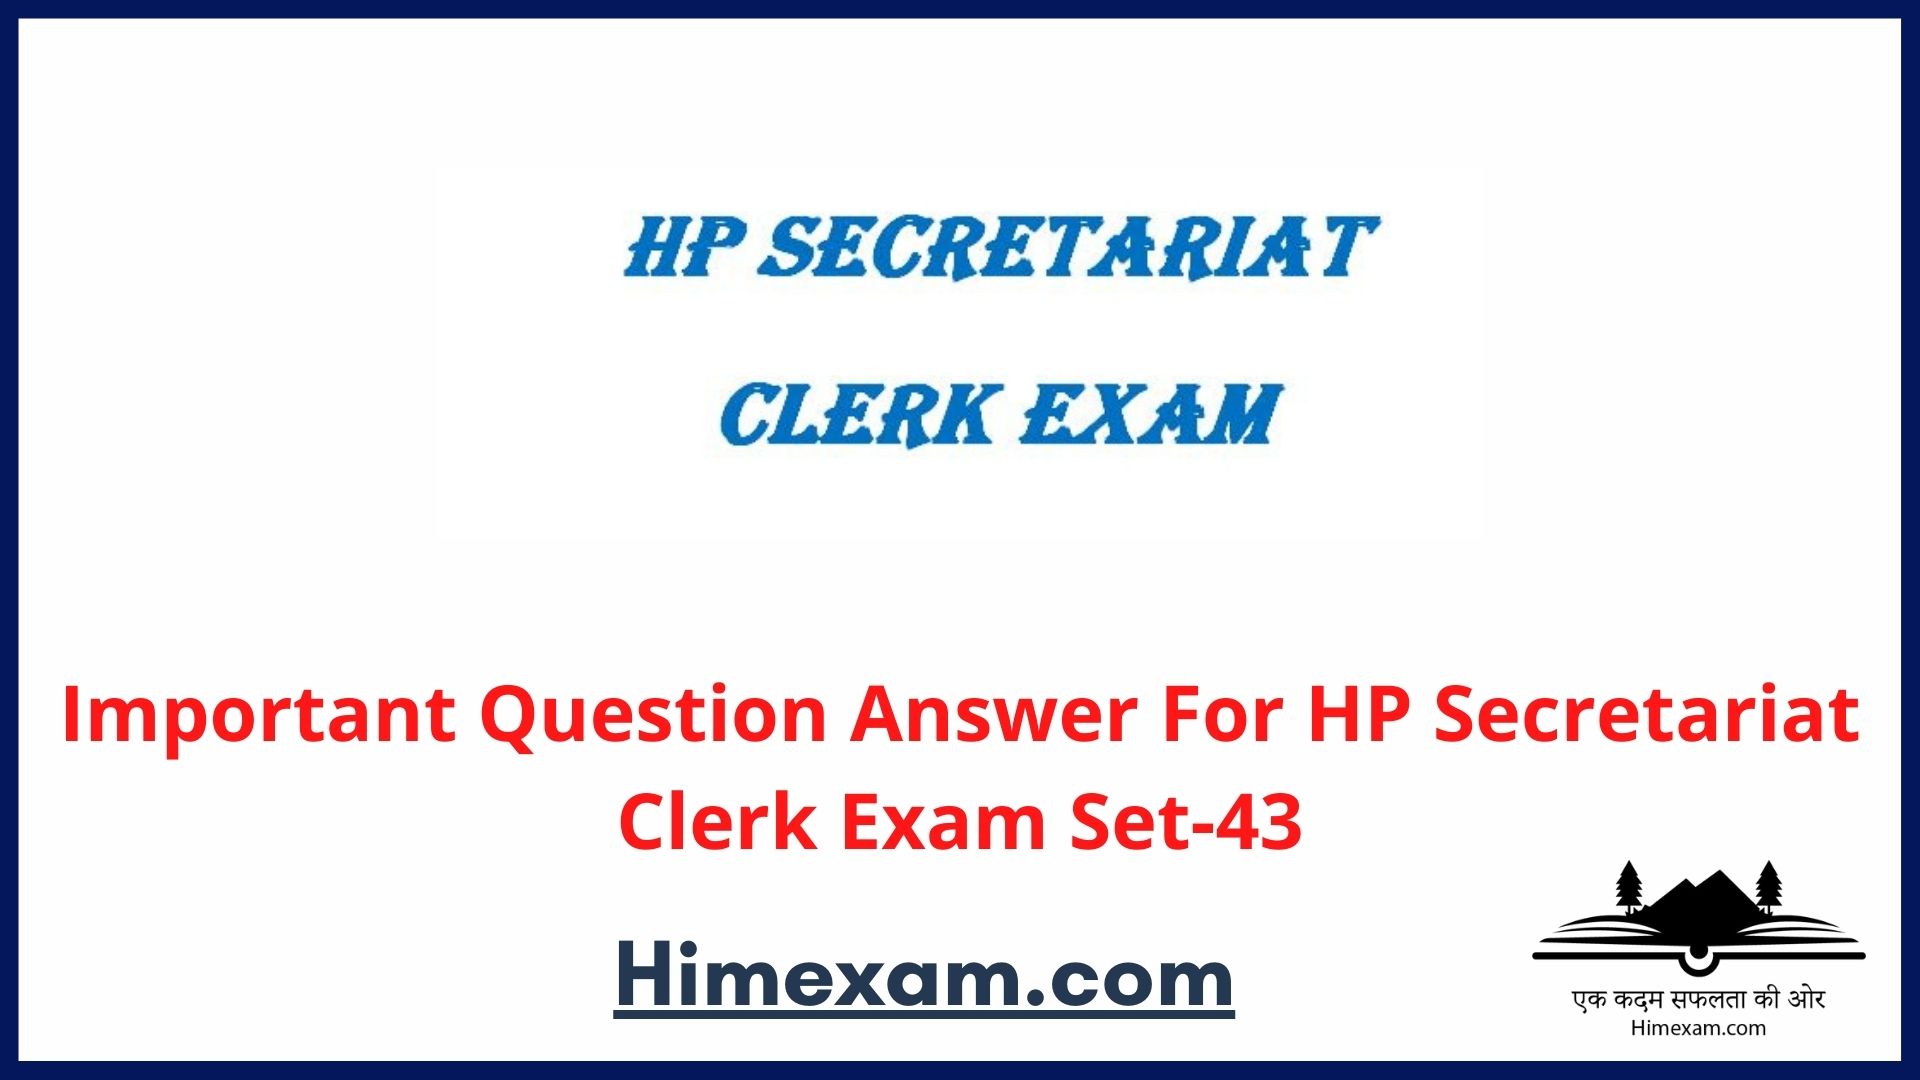 Important Question Answer For HP Secretariat Clerk Exam Set-43